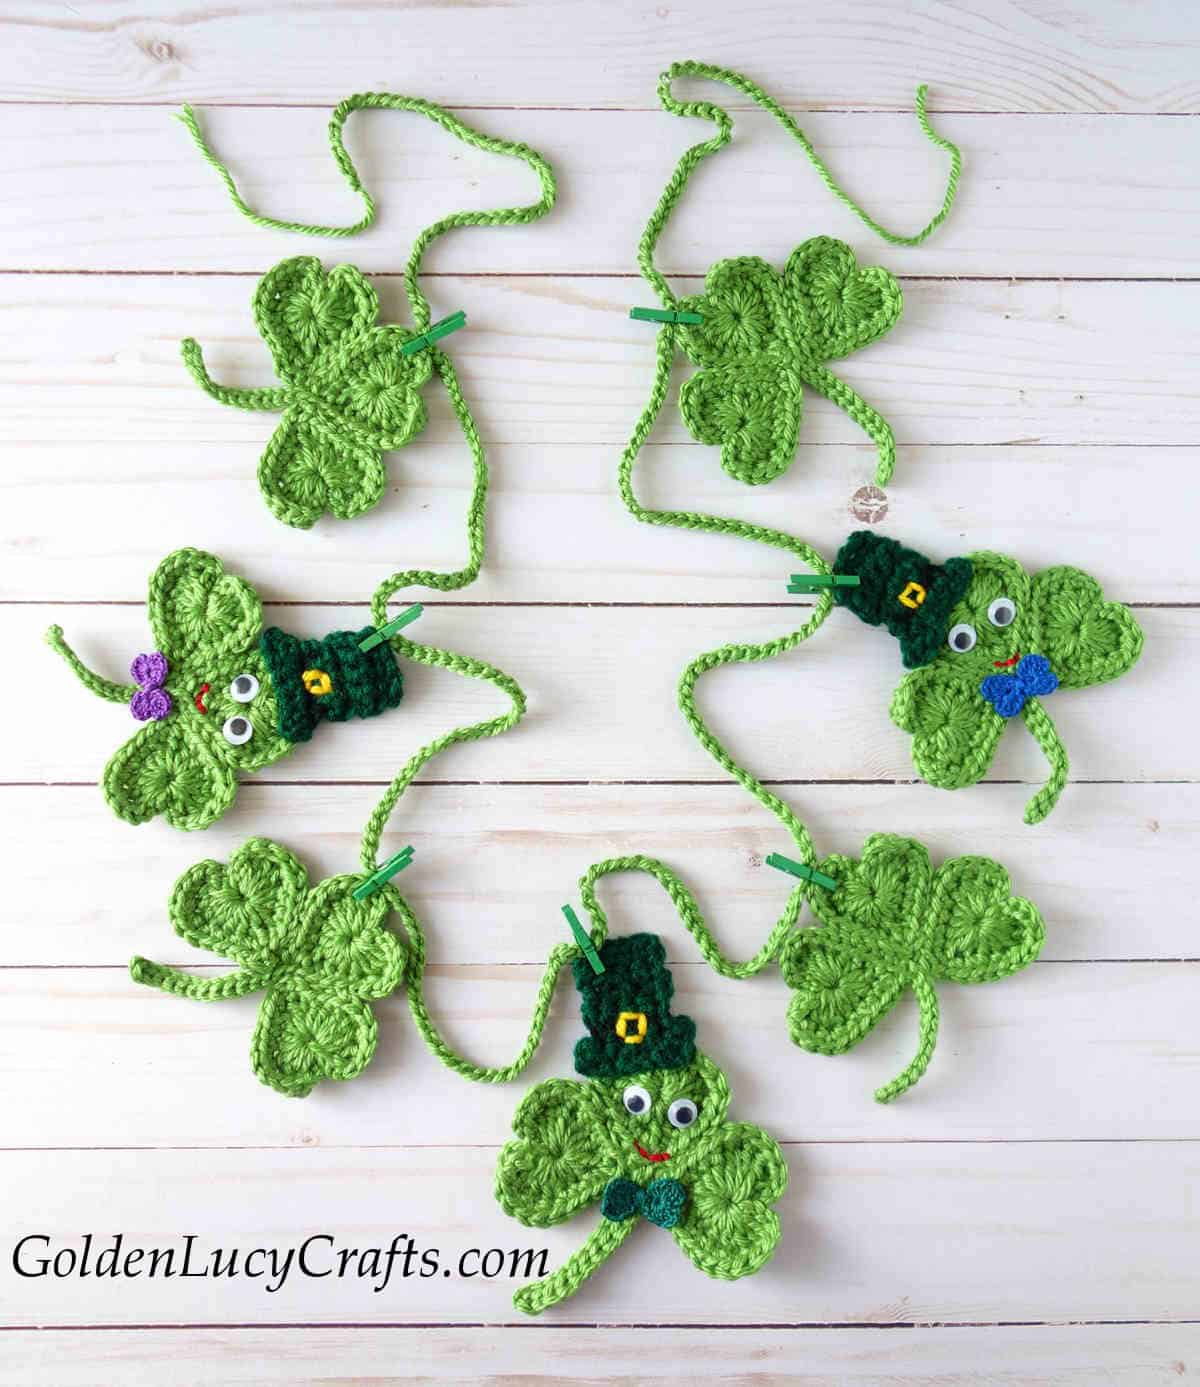 Crocheted shamrock garland for St. Patrick's Day.